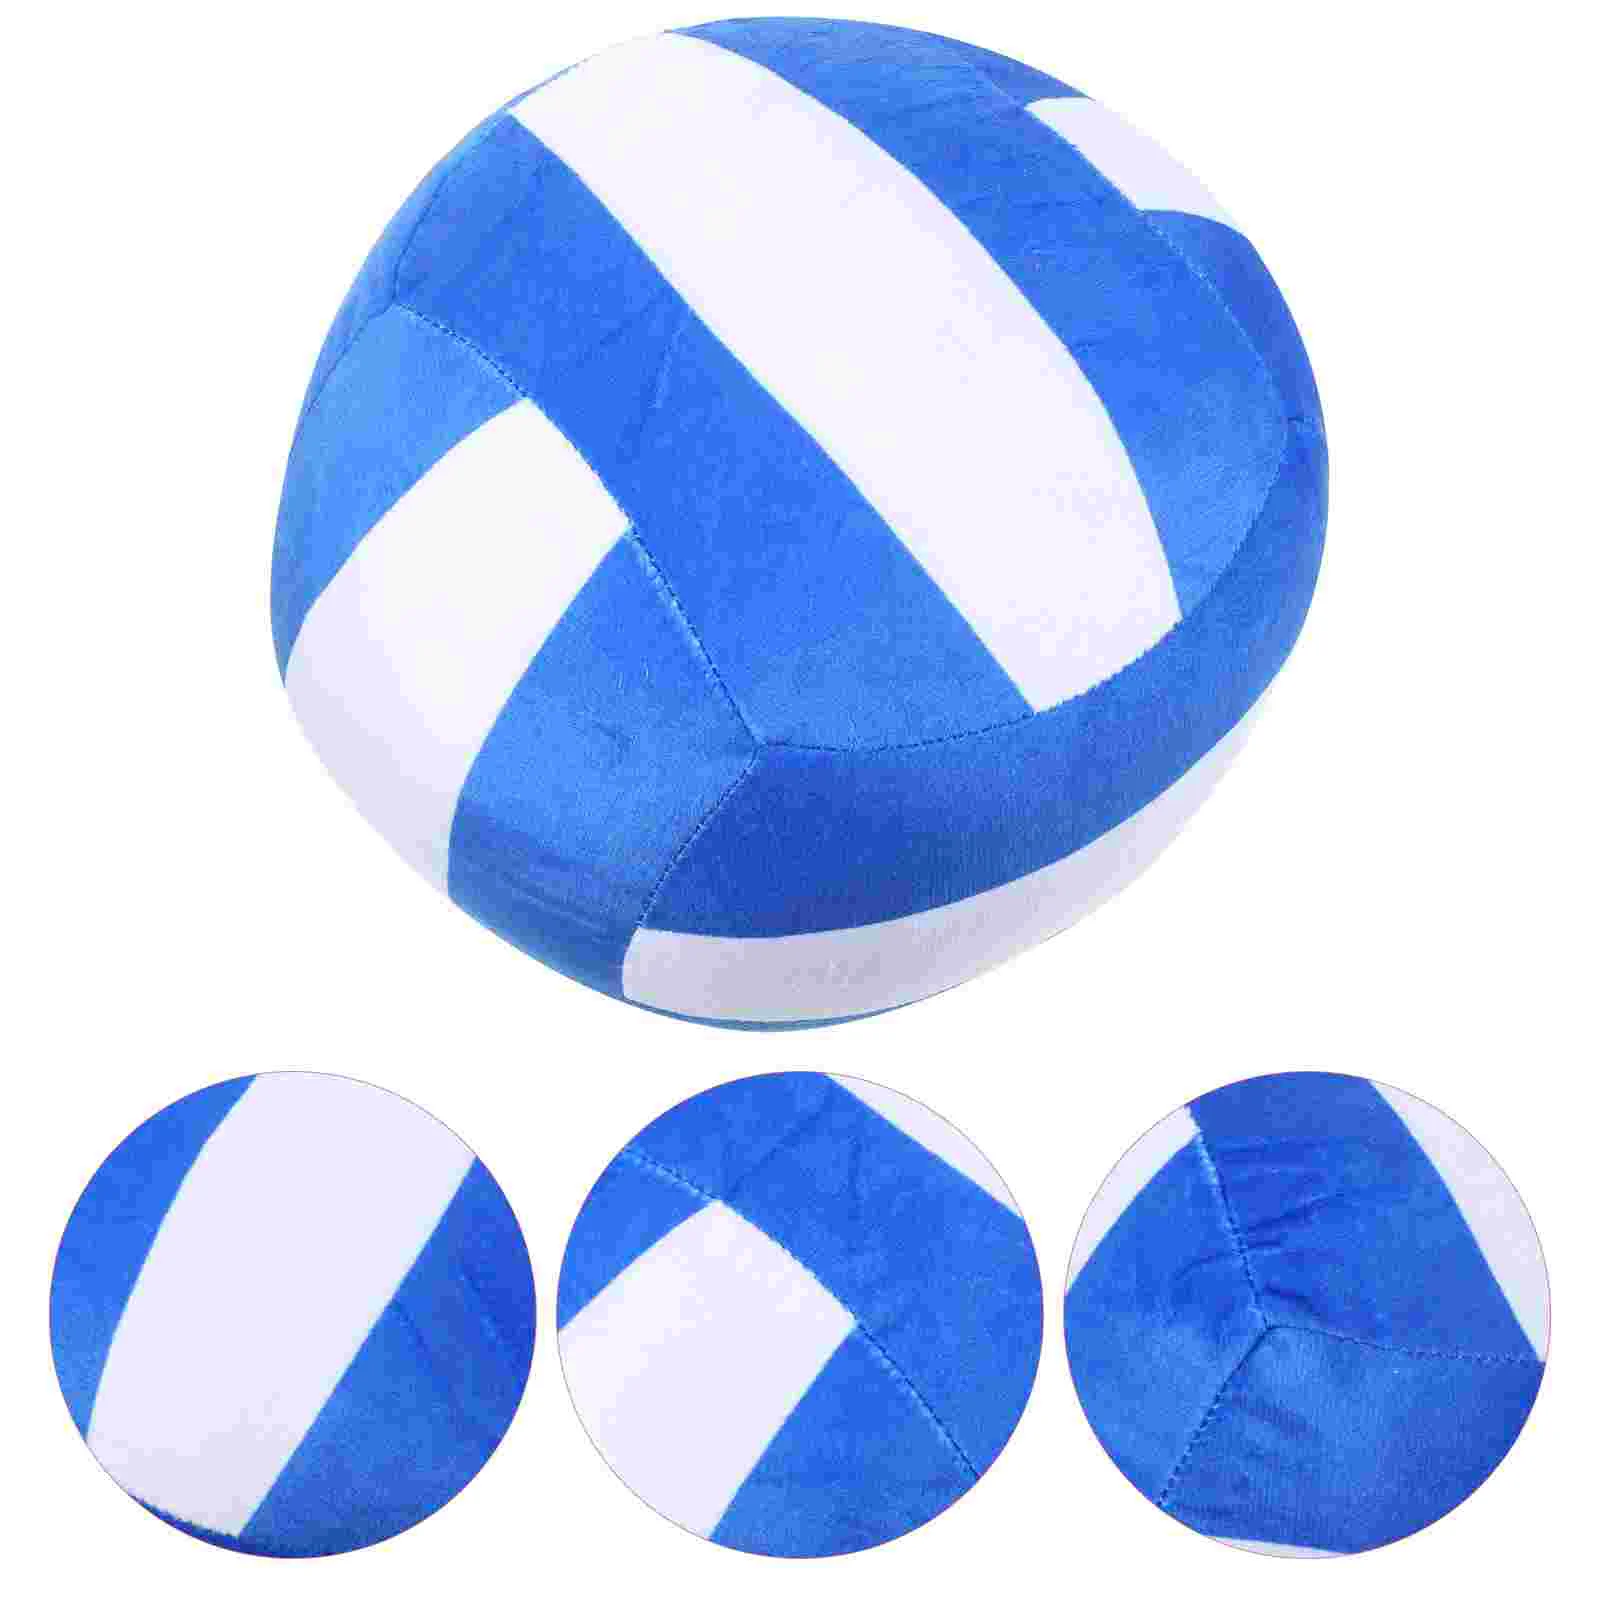 

Blue Decor Plush Volleyball Stuffed Volleyball Pillow Soft Fluffy Decorative Pillows